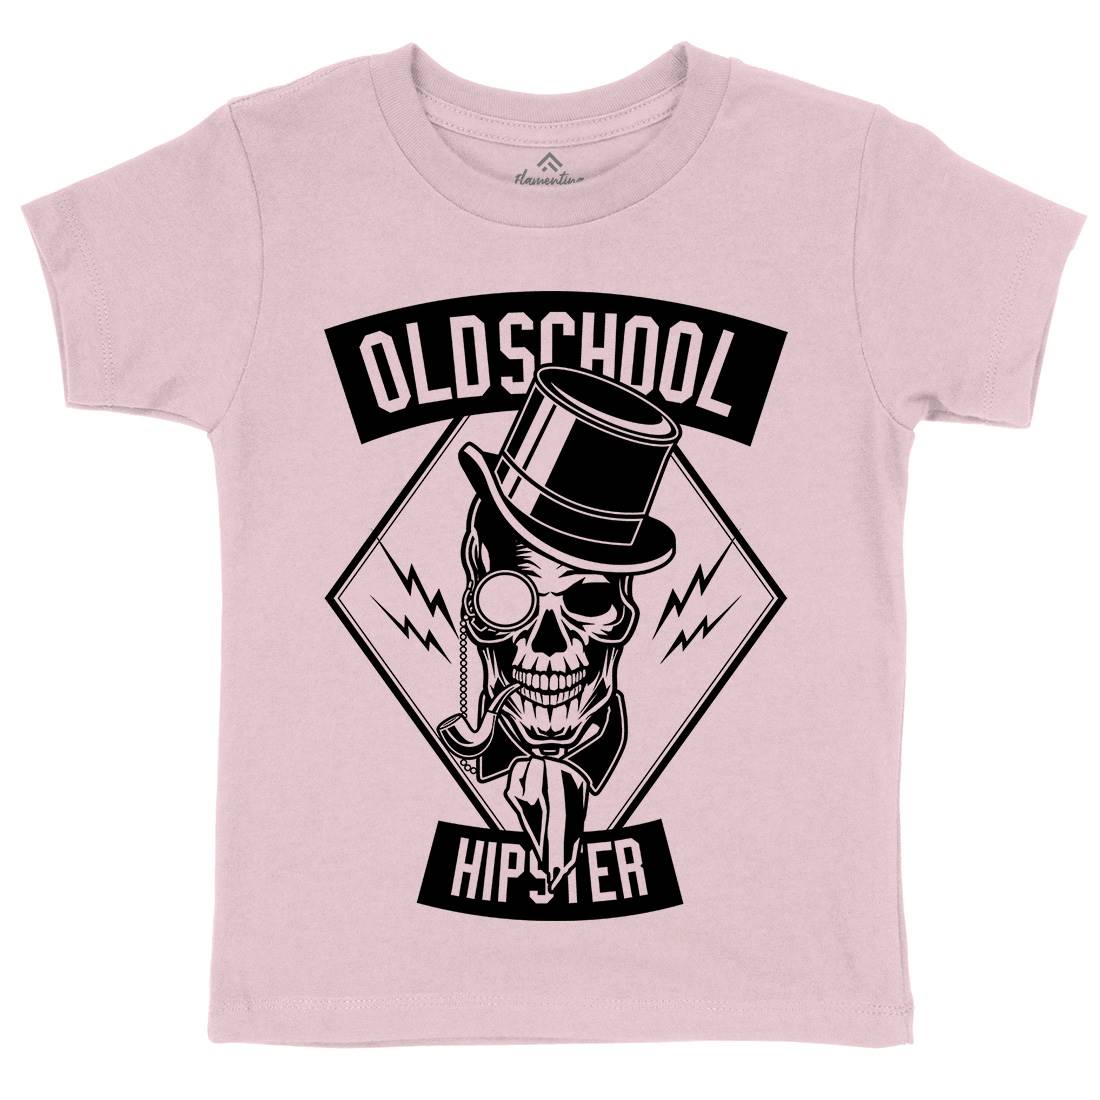 Old School Hipster Kids Crew Neck T-Shirt Retro B592